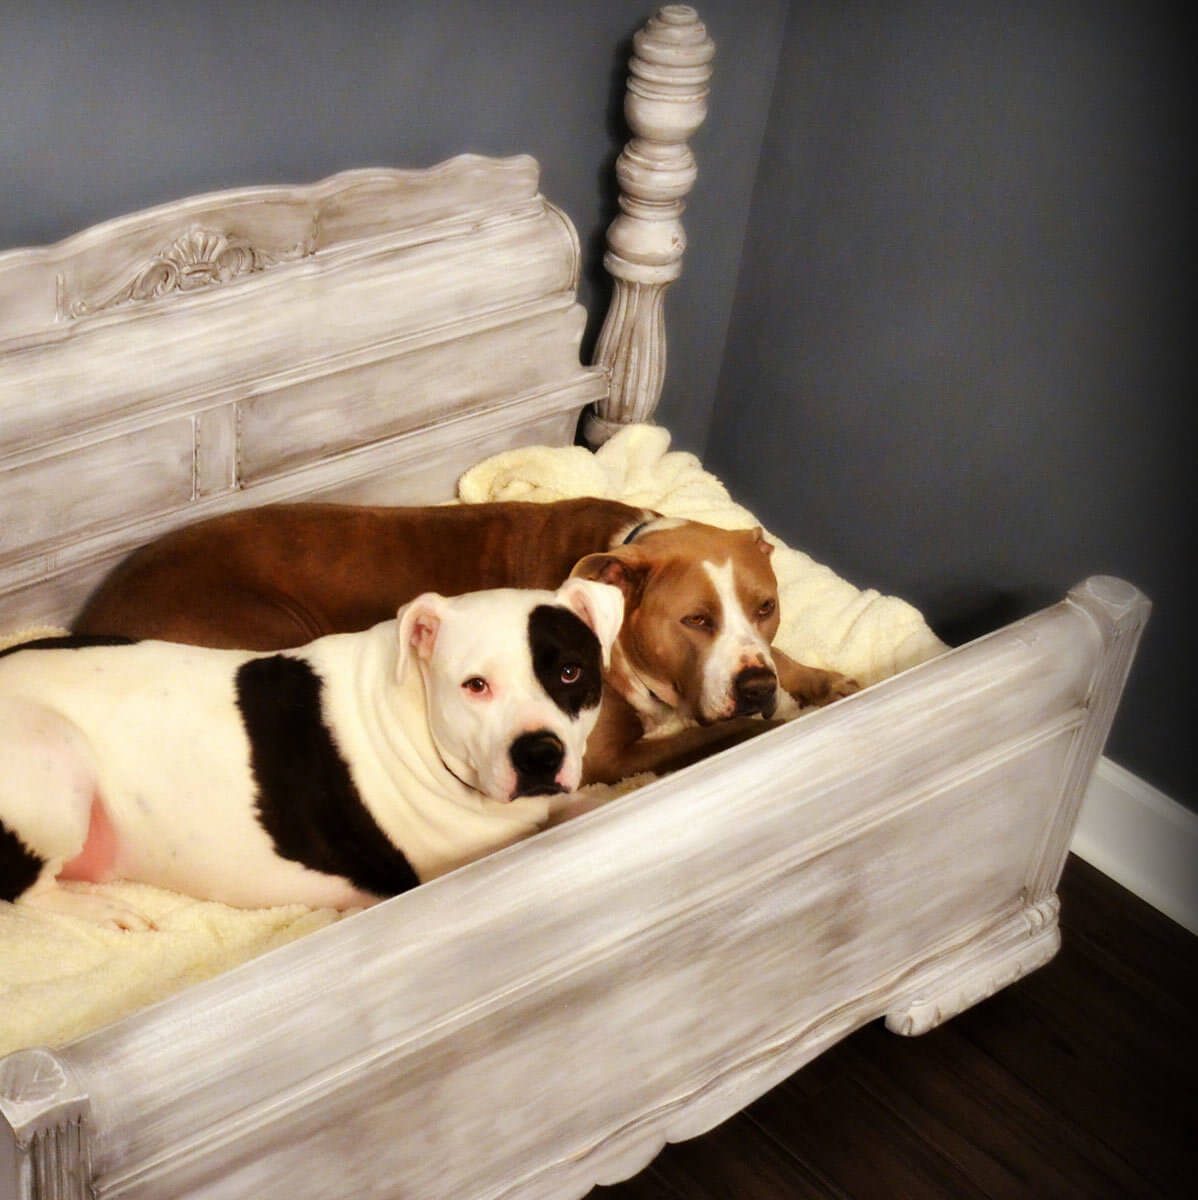 make a dog bed